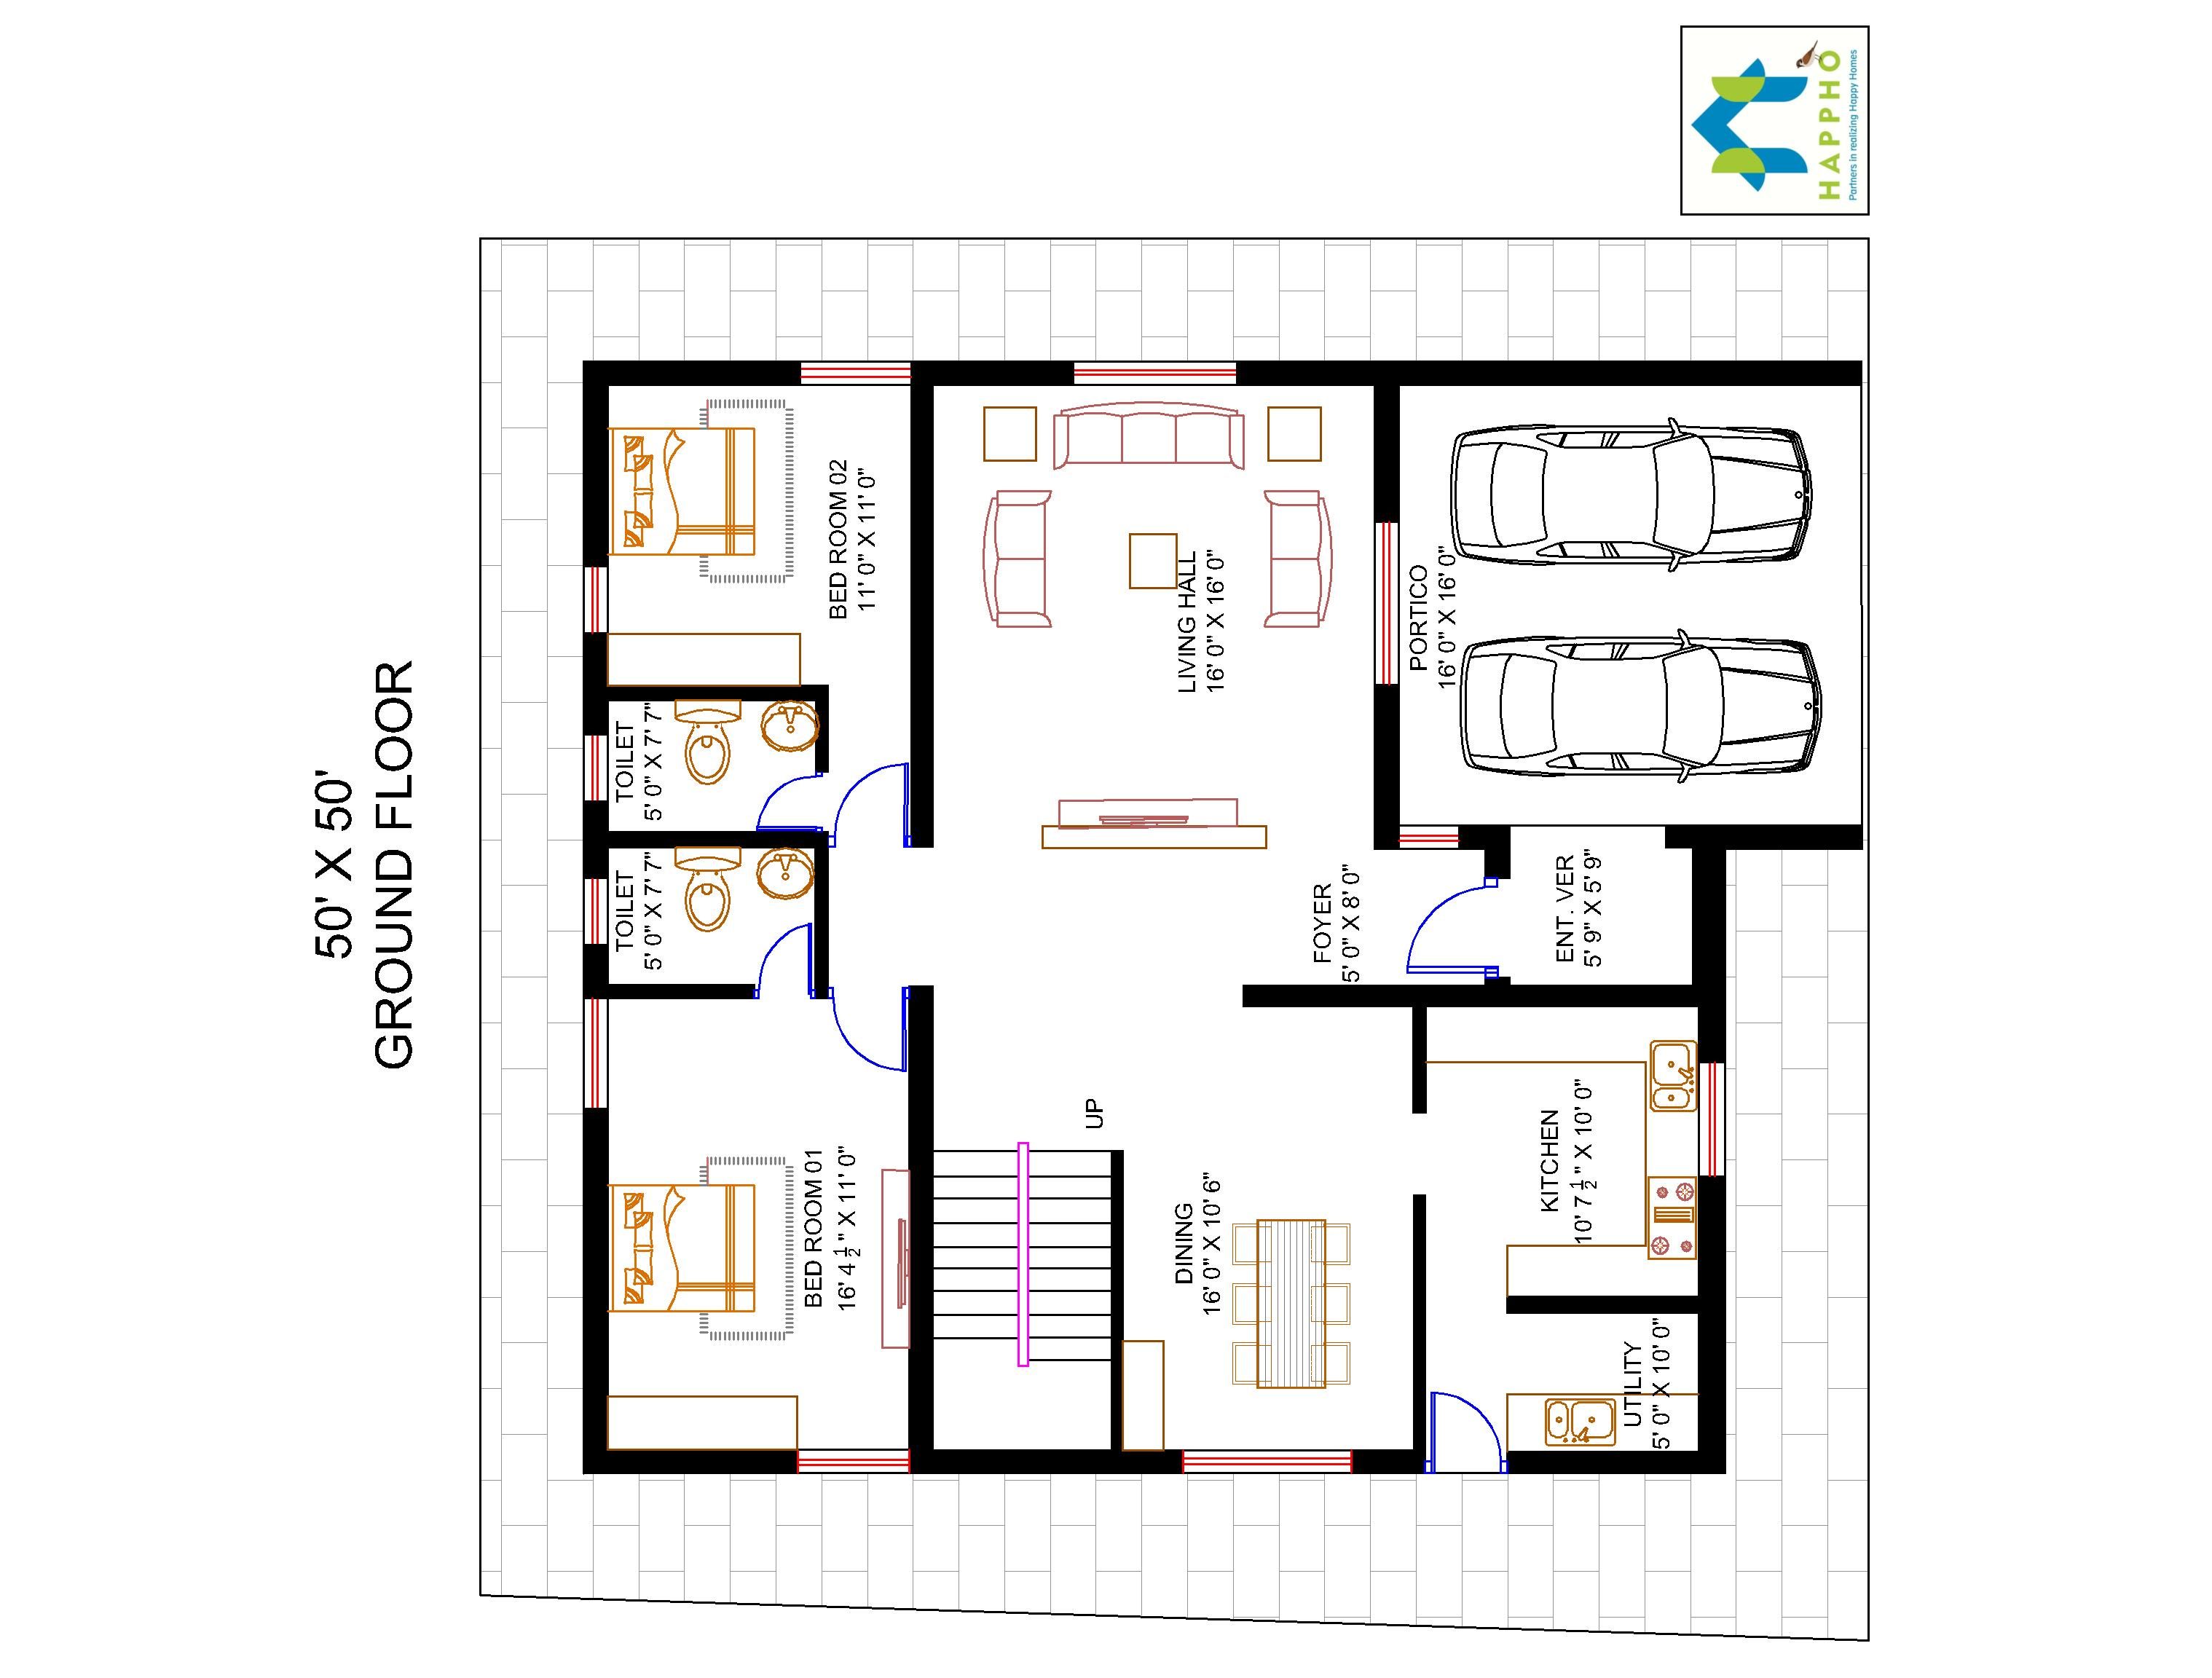 4BHK Floor Plan for 50 X 50 Plot (2500 Square Feet/278